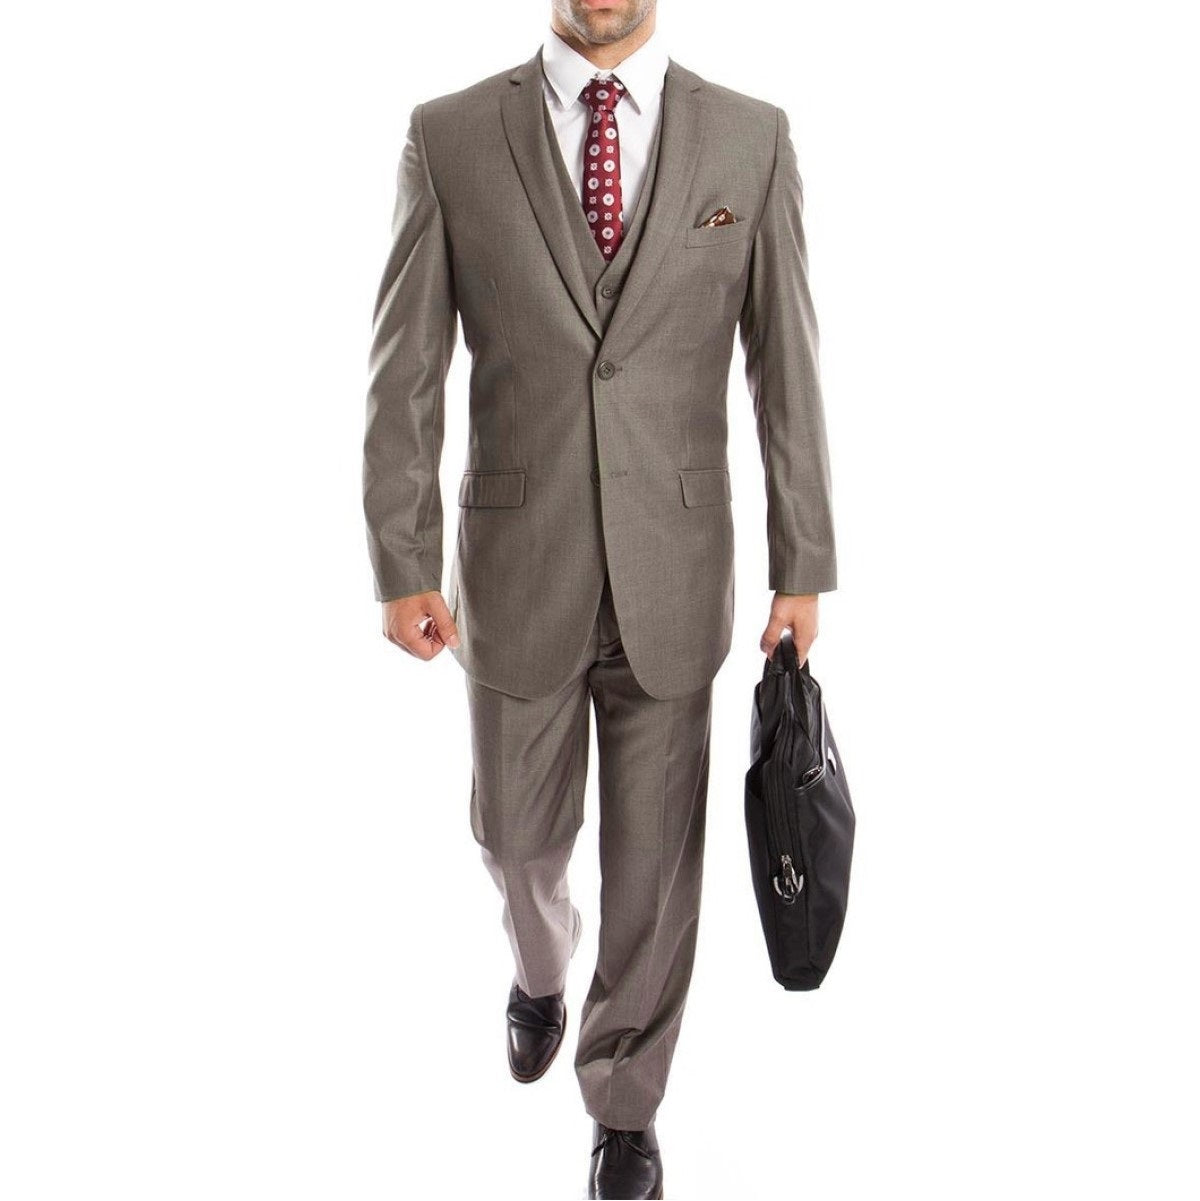 Traje Formal para Hombre TA-M154S-04 Grey - Formal Suit for Men